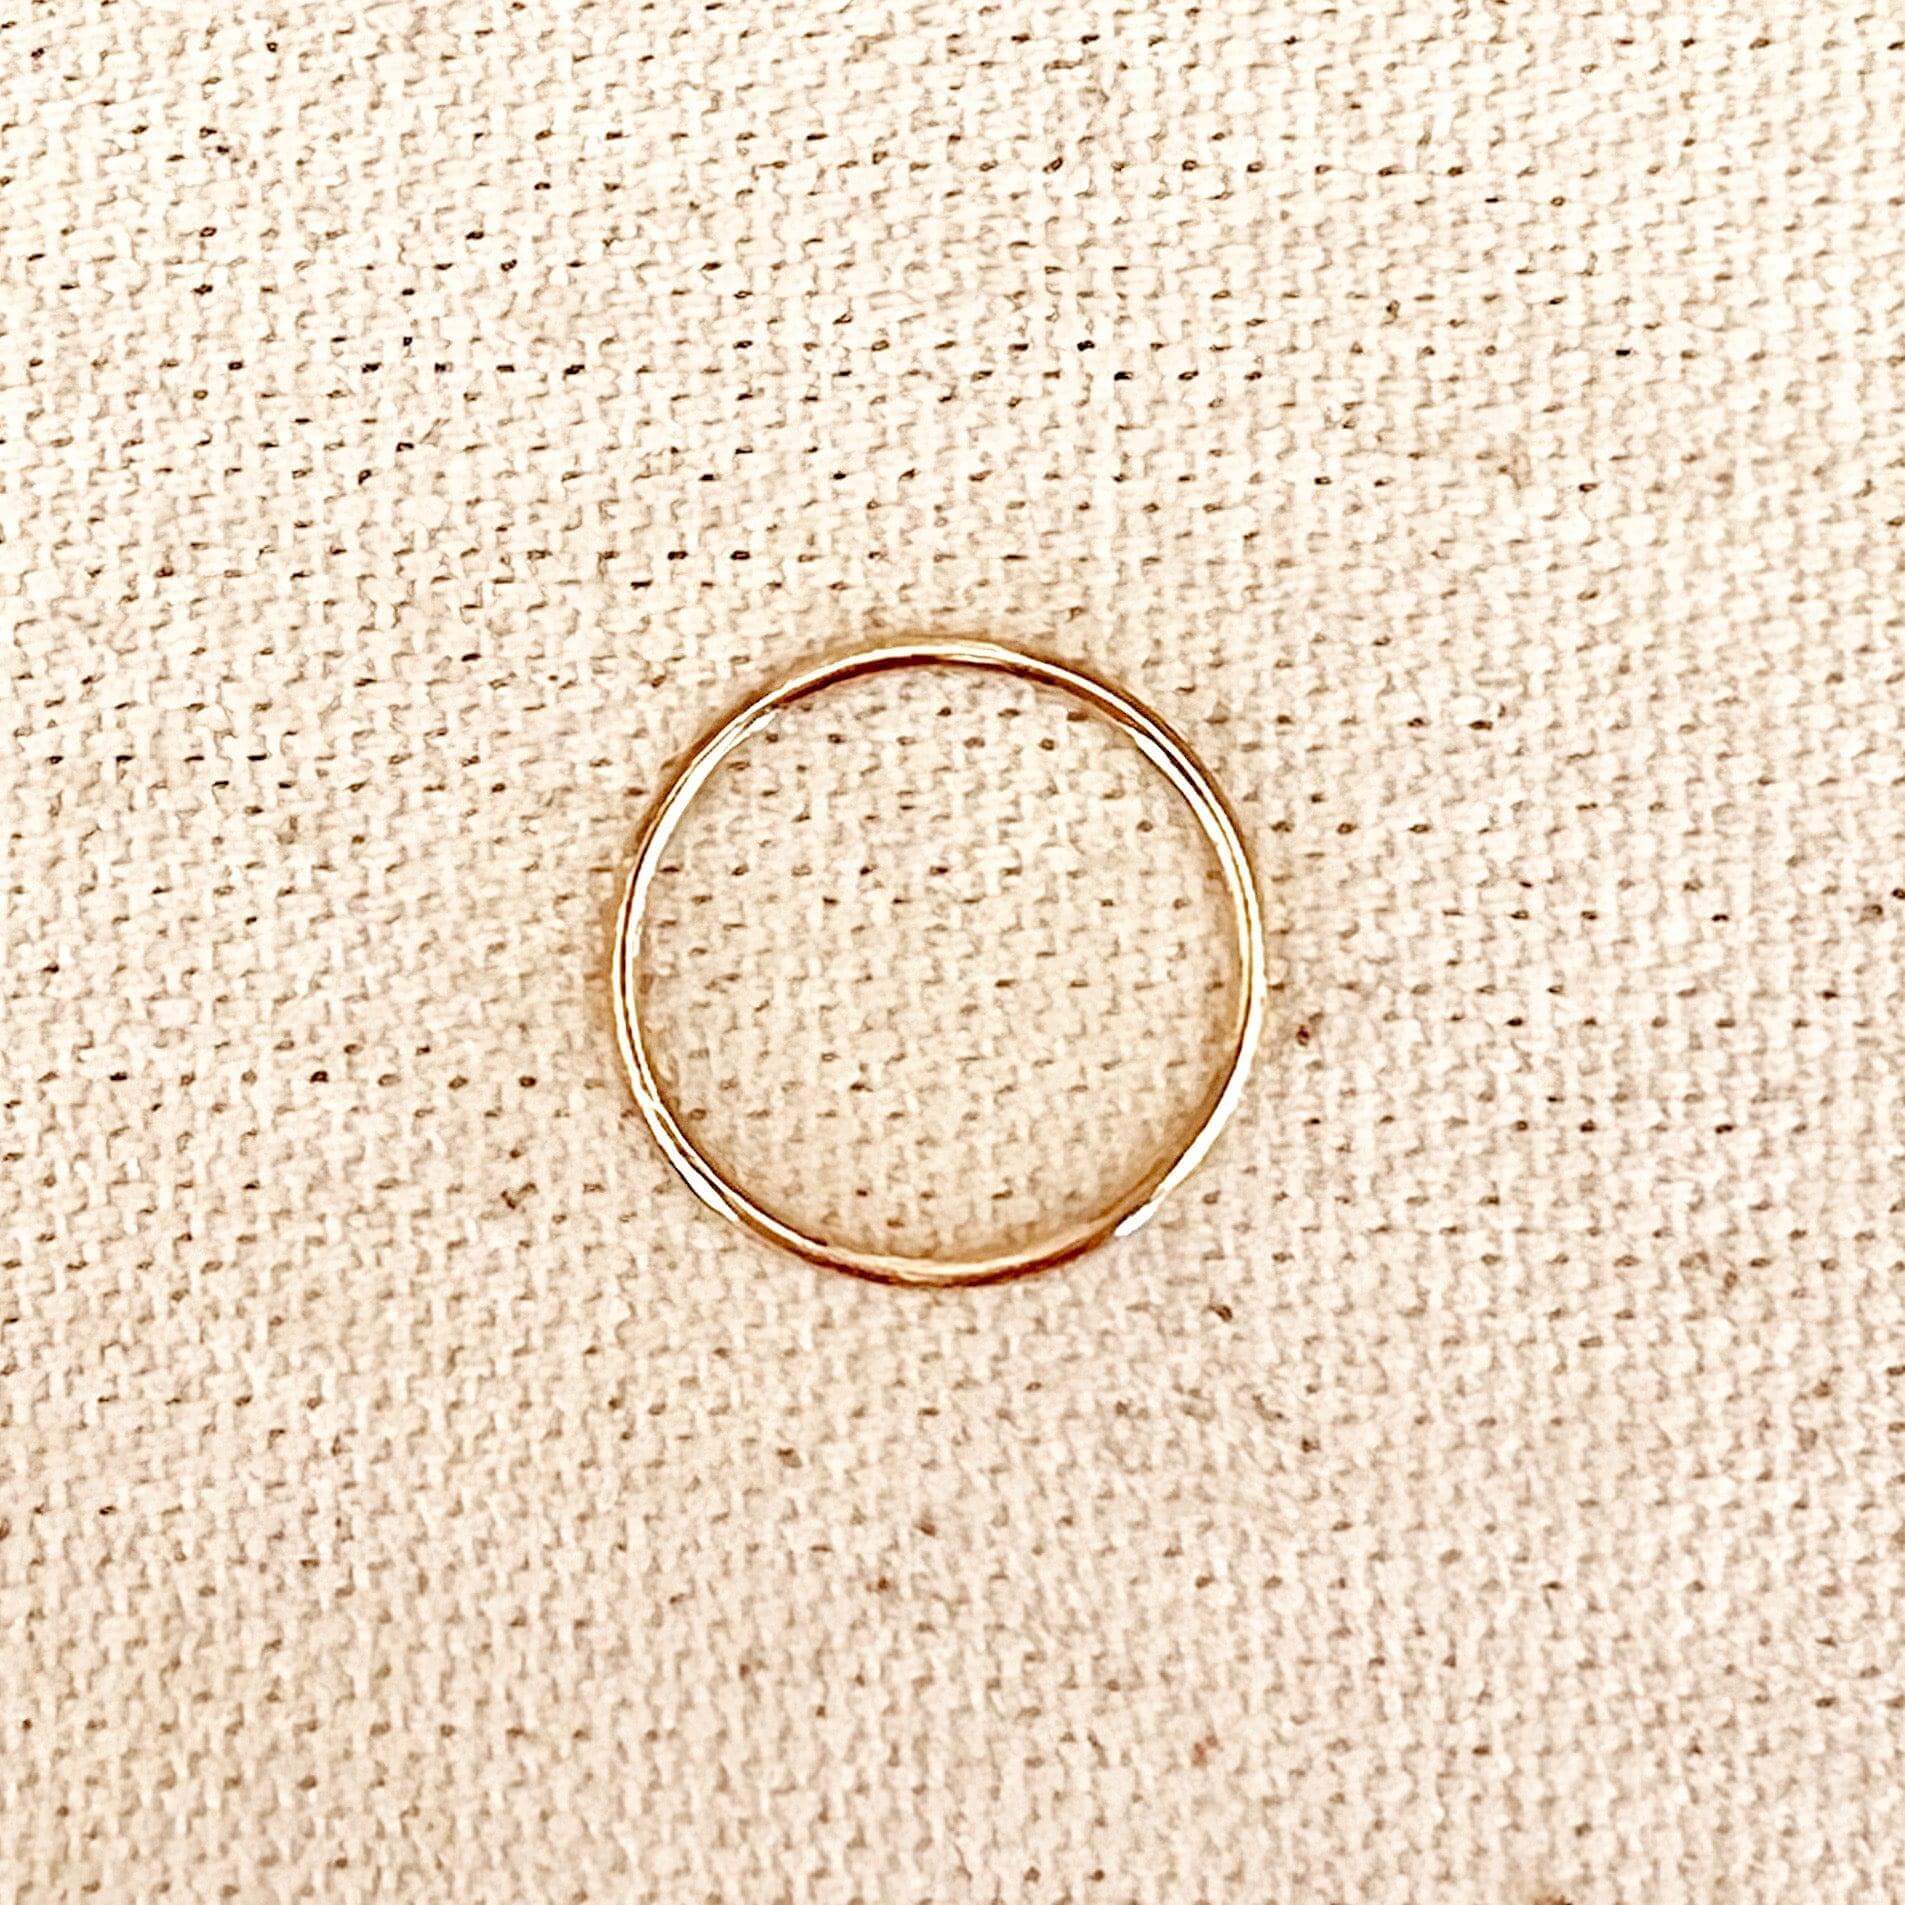 GoldFi 14k Gold Filled 1mm Plain Stackable Ring